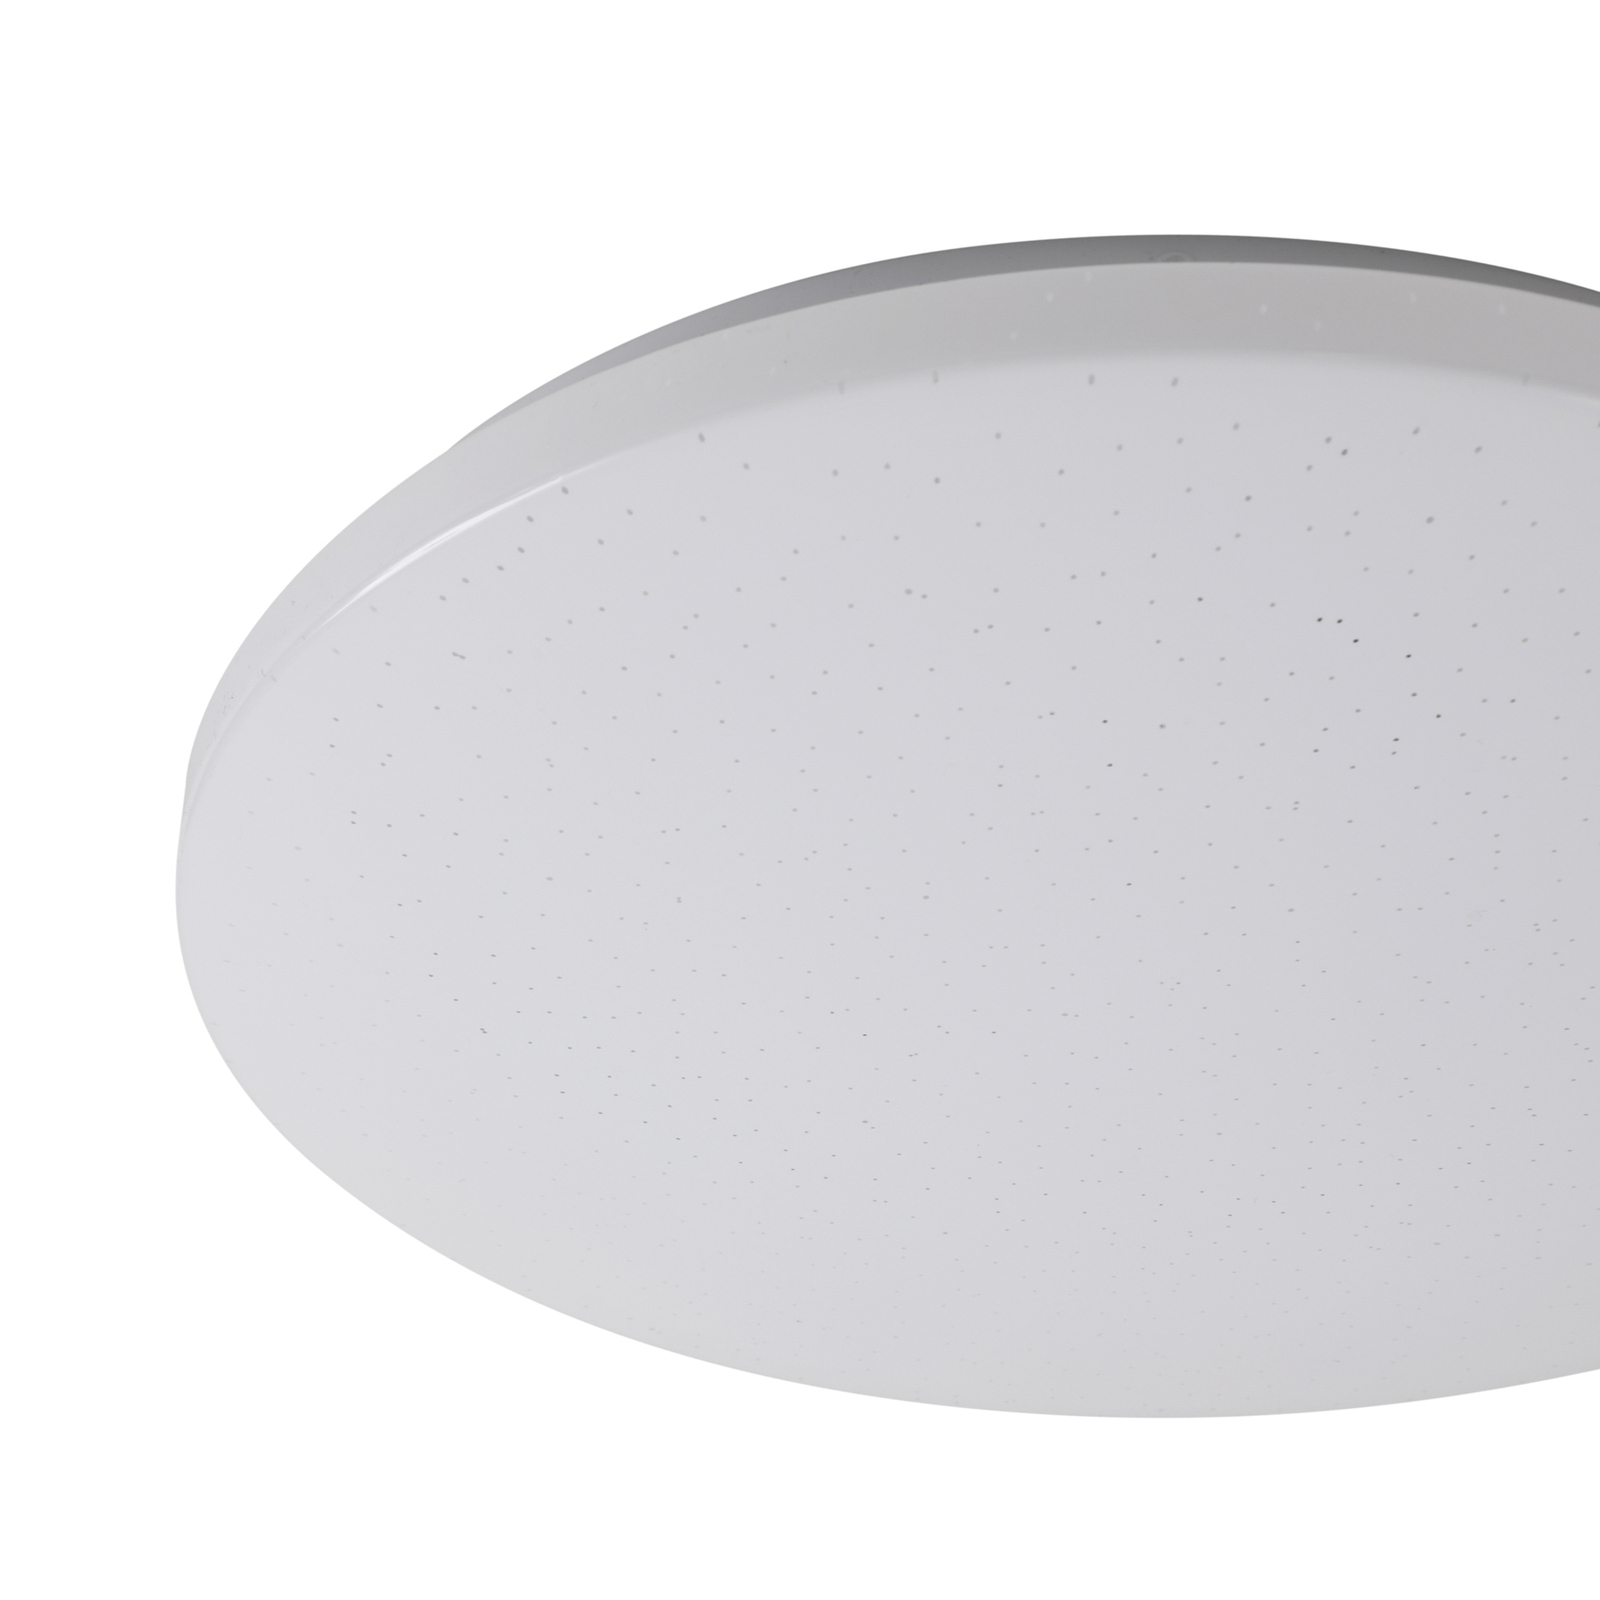 Lindby LED outdoor ceiling light Astera, white, 3,000 K, Ø 33 cm